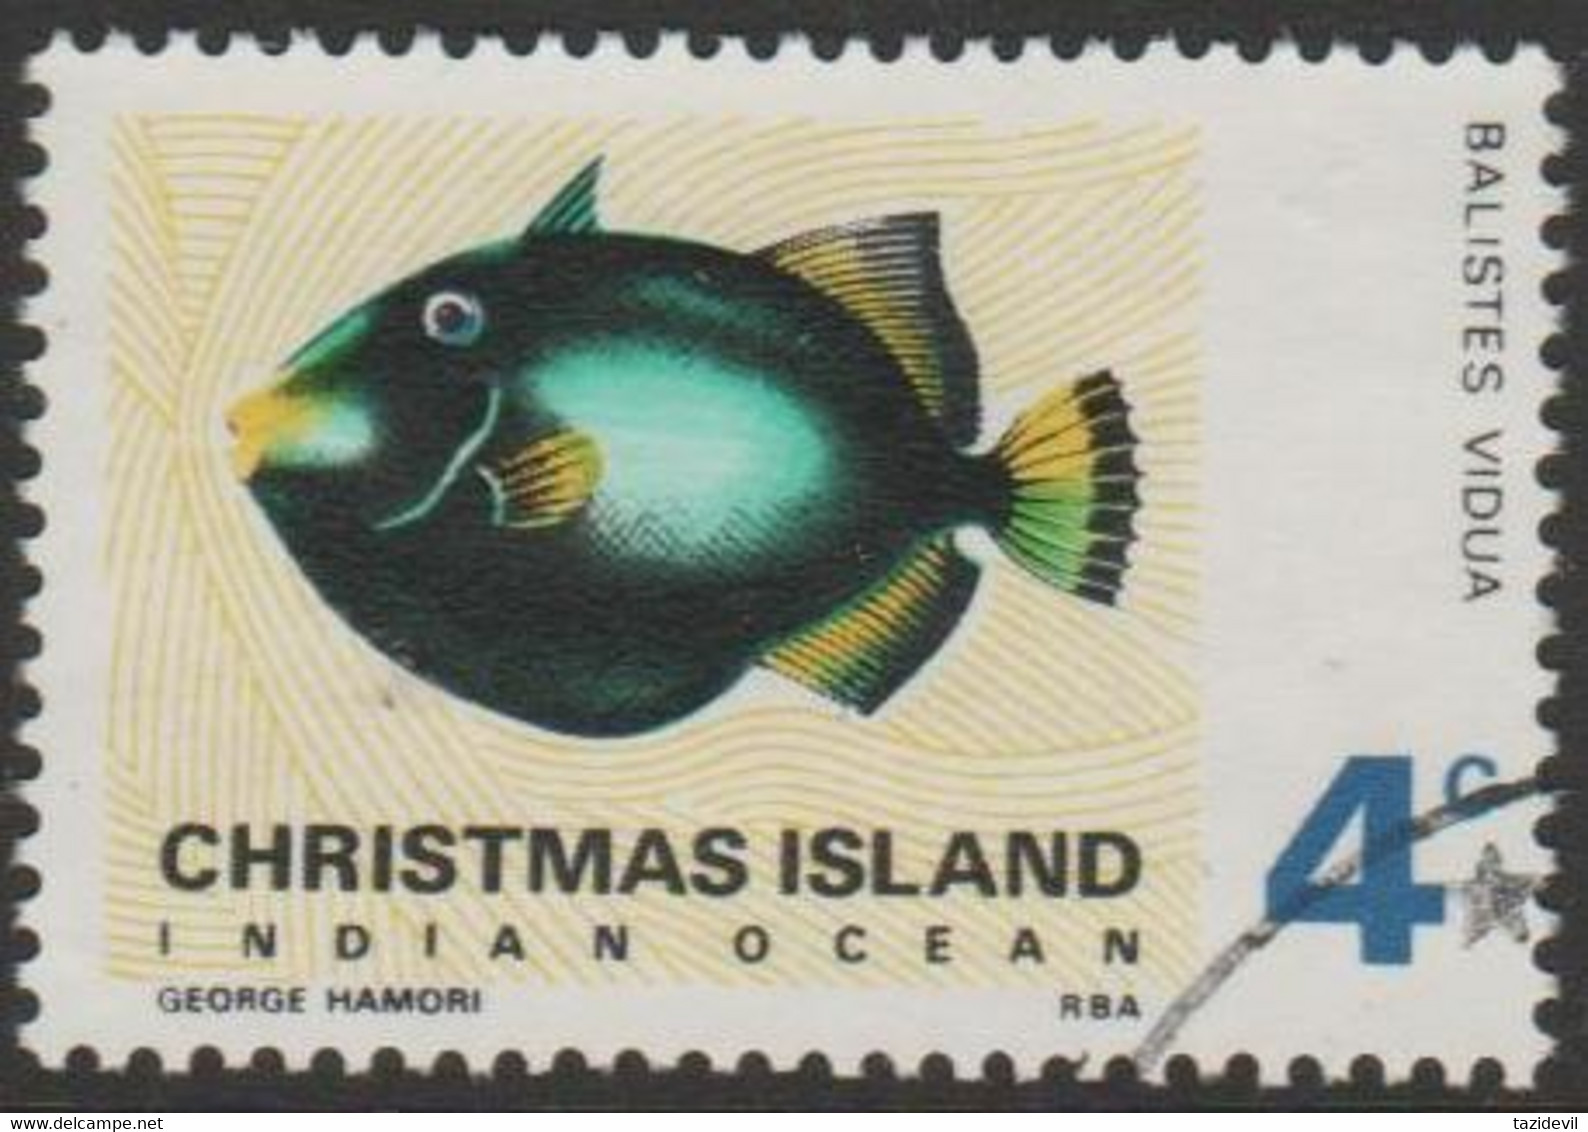 CHRISTMAS ISLAND - USED 1968 4c Fish - Queen Triggerfish - Christmas Island